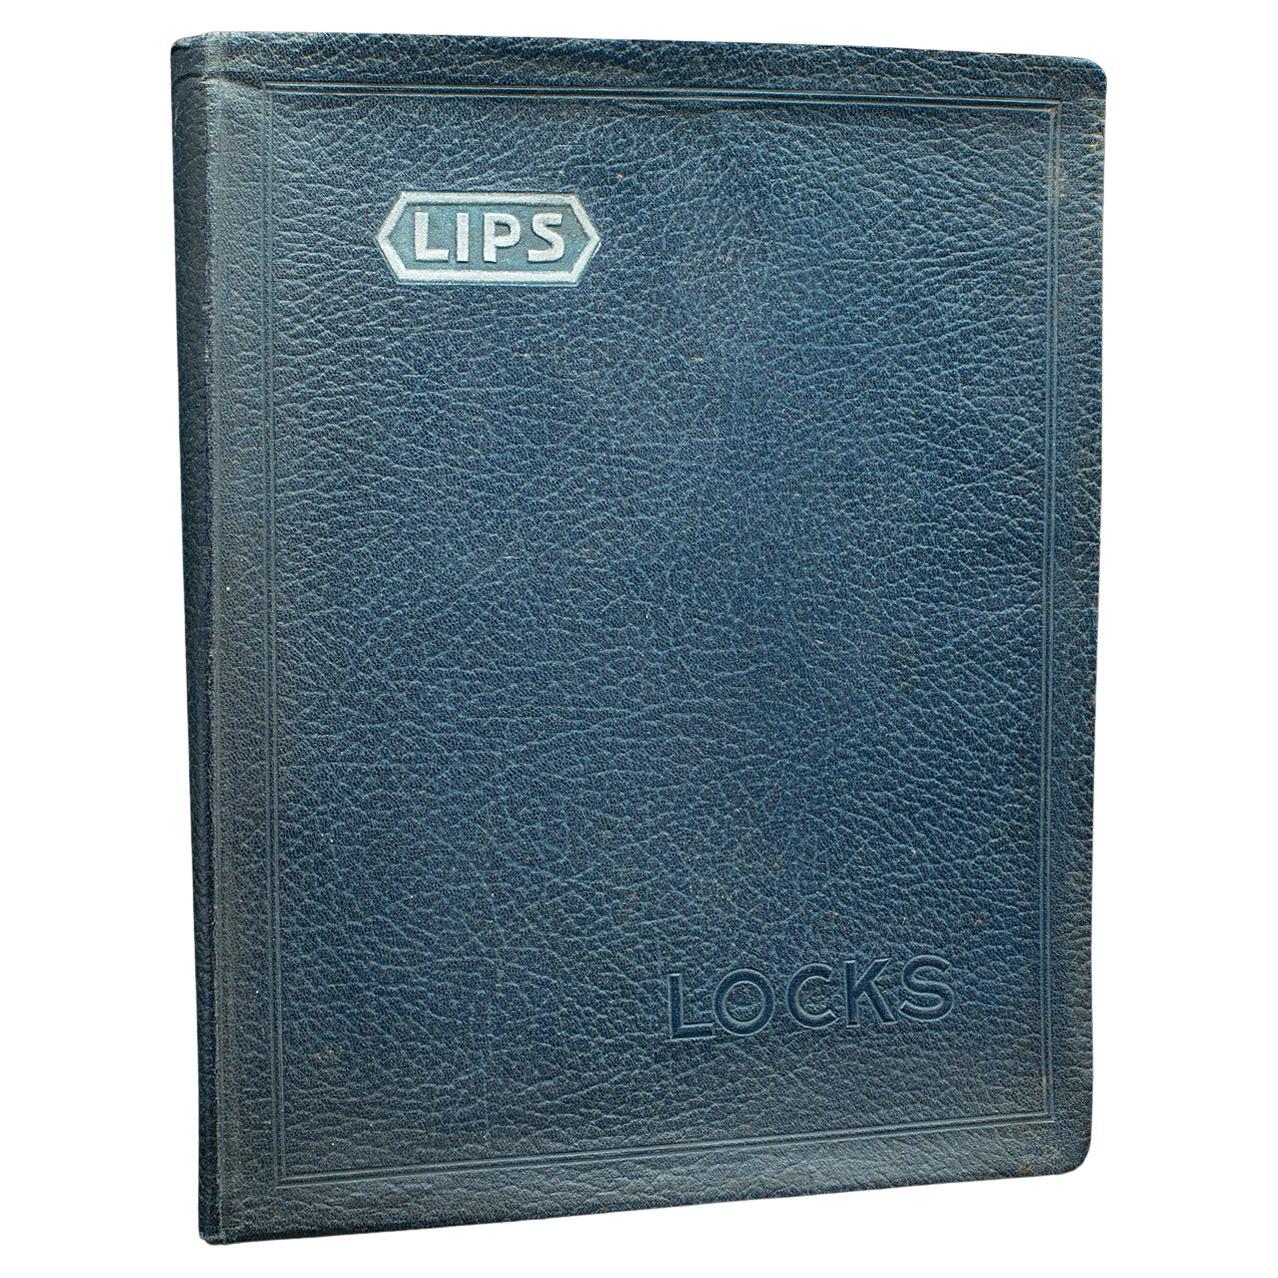 Vintage Lips Locks Trade Catalogue, English, Folio, Nicholls and Clarke, C.1935 For Sale